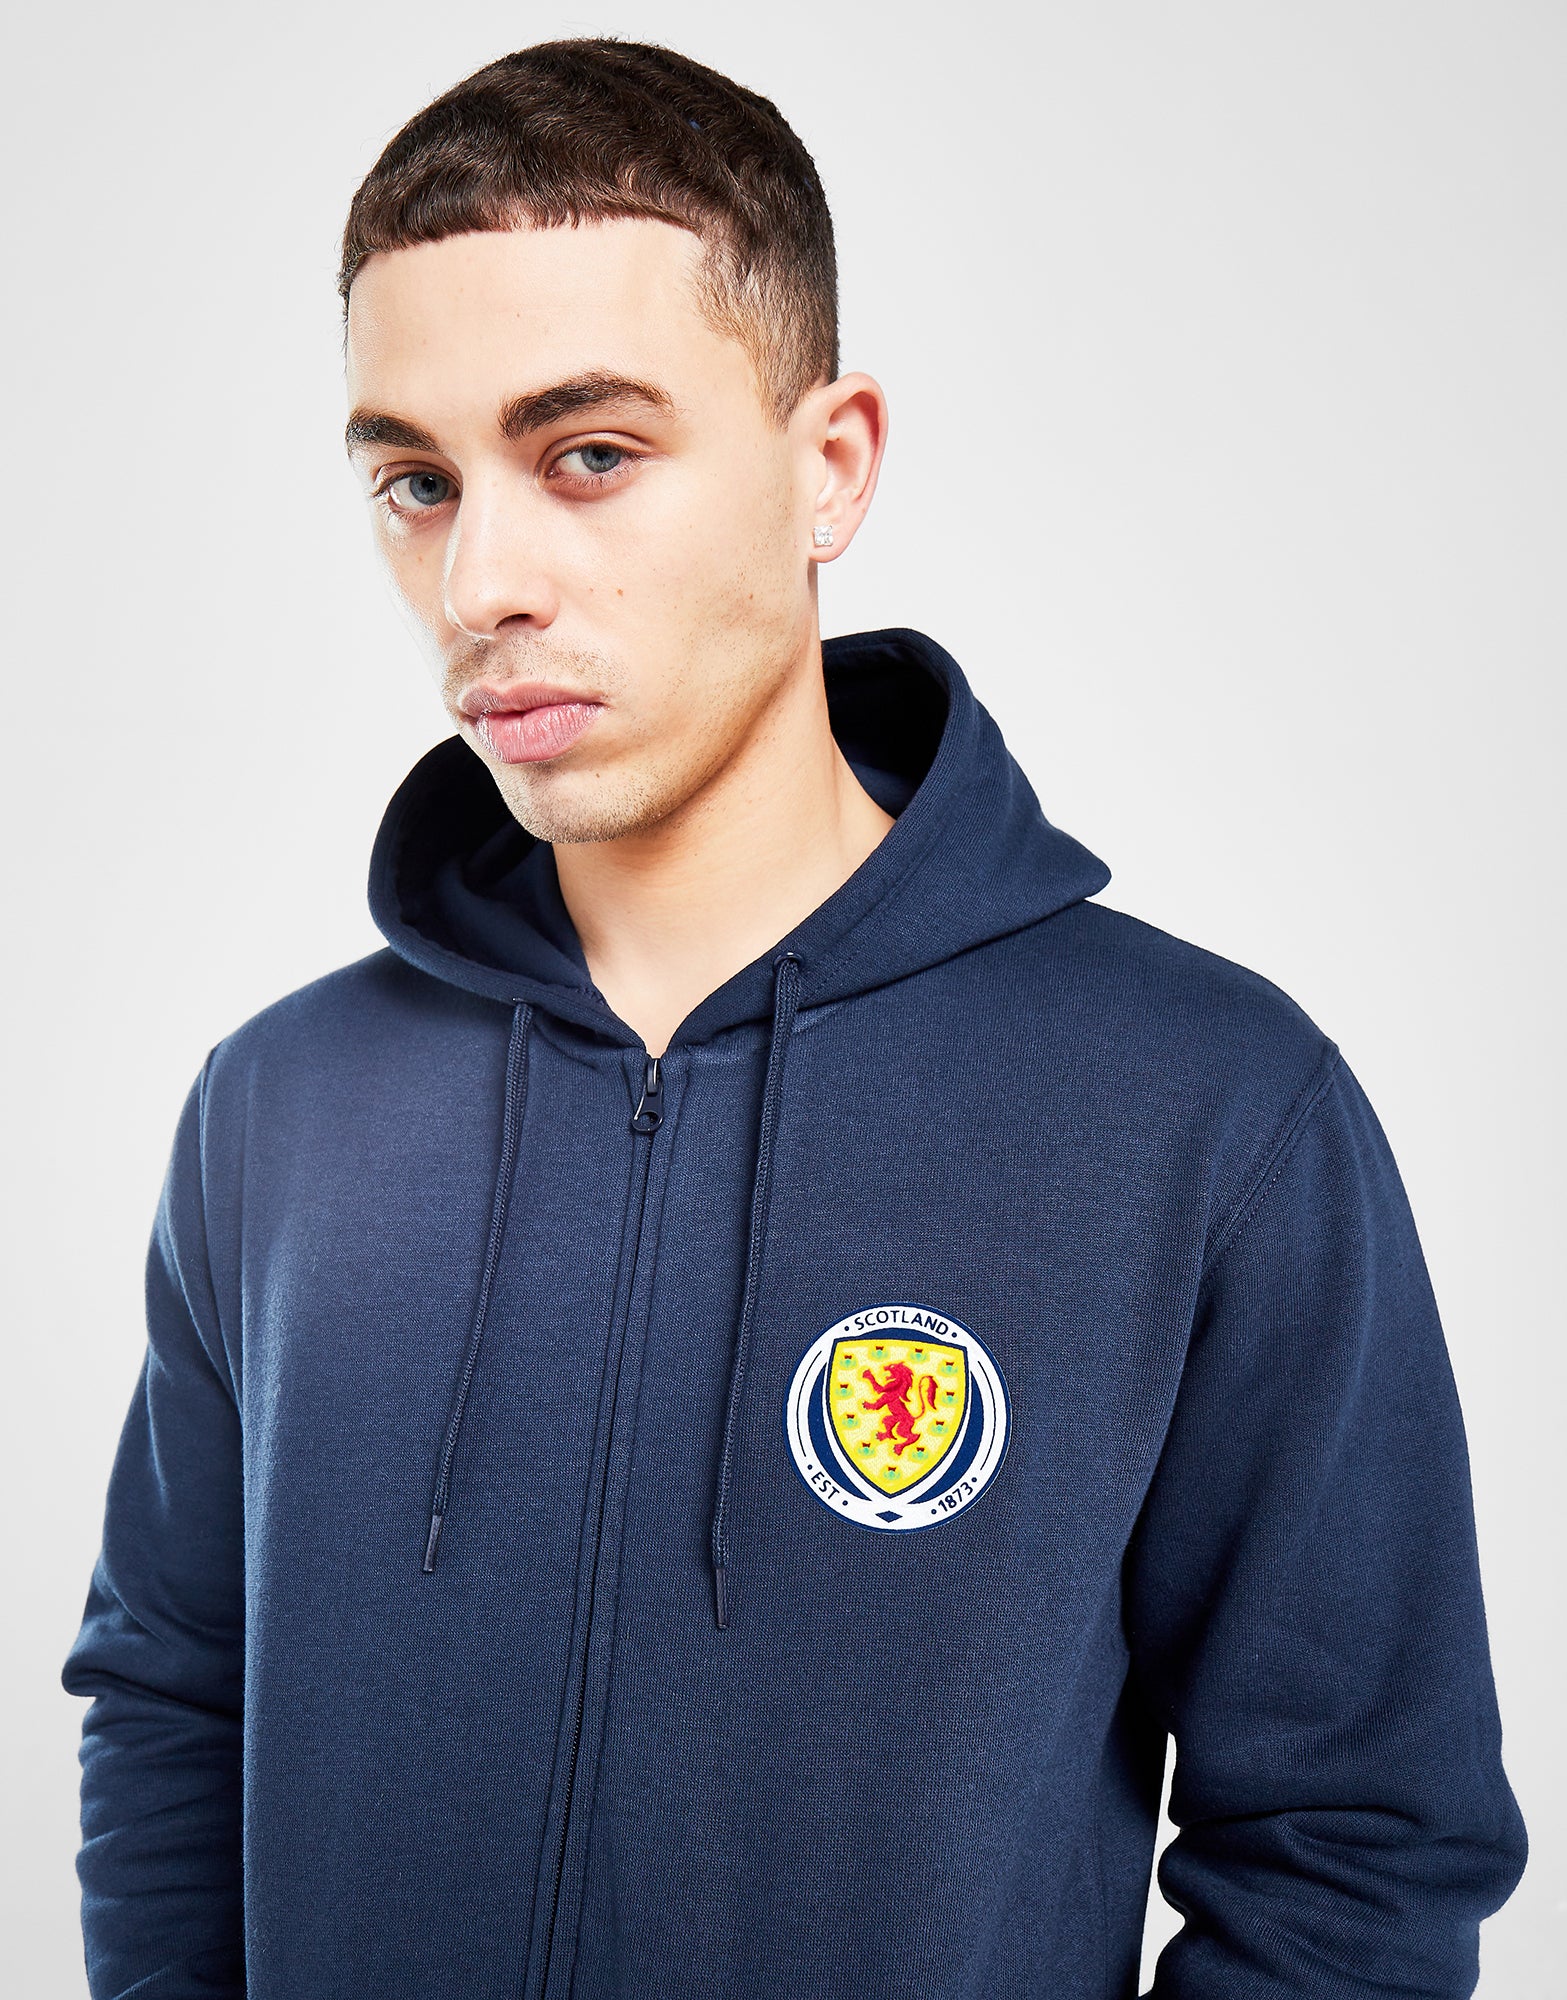 Official Team Scotland Crest Badge Zip Hoodie - Navy - The World Football Store